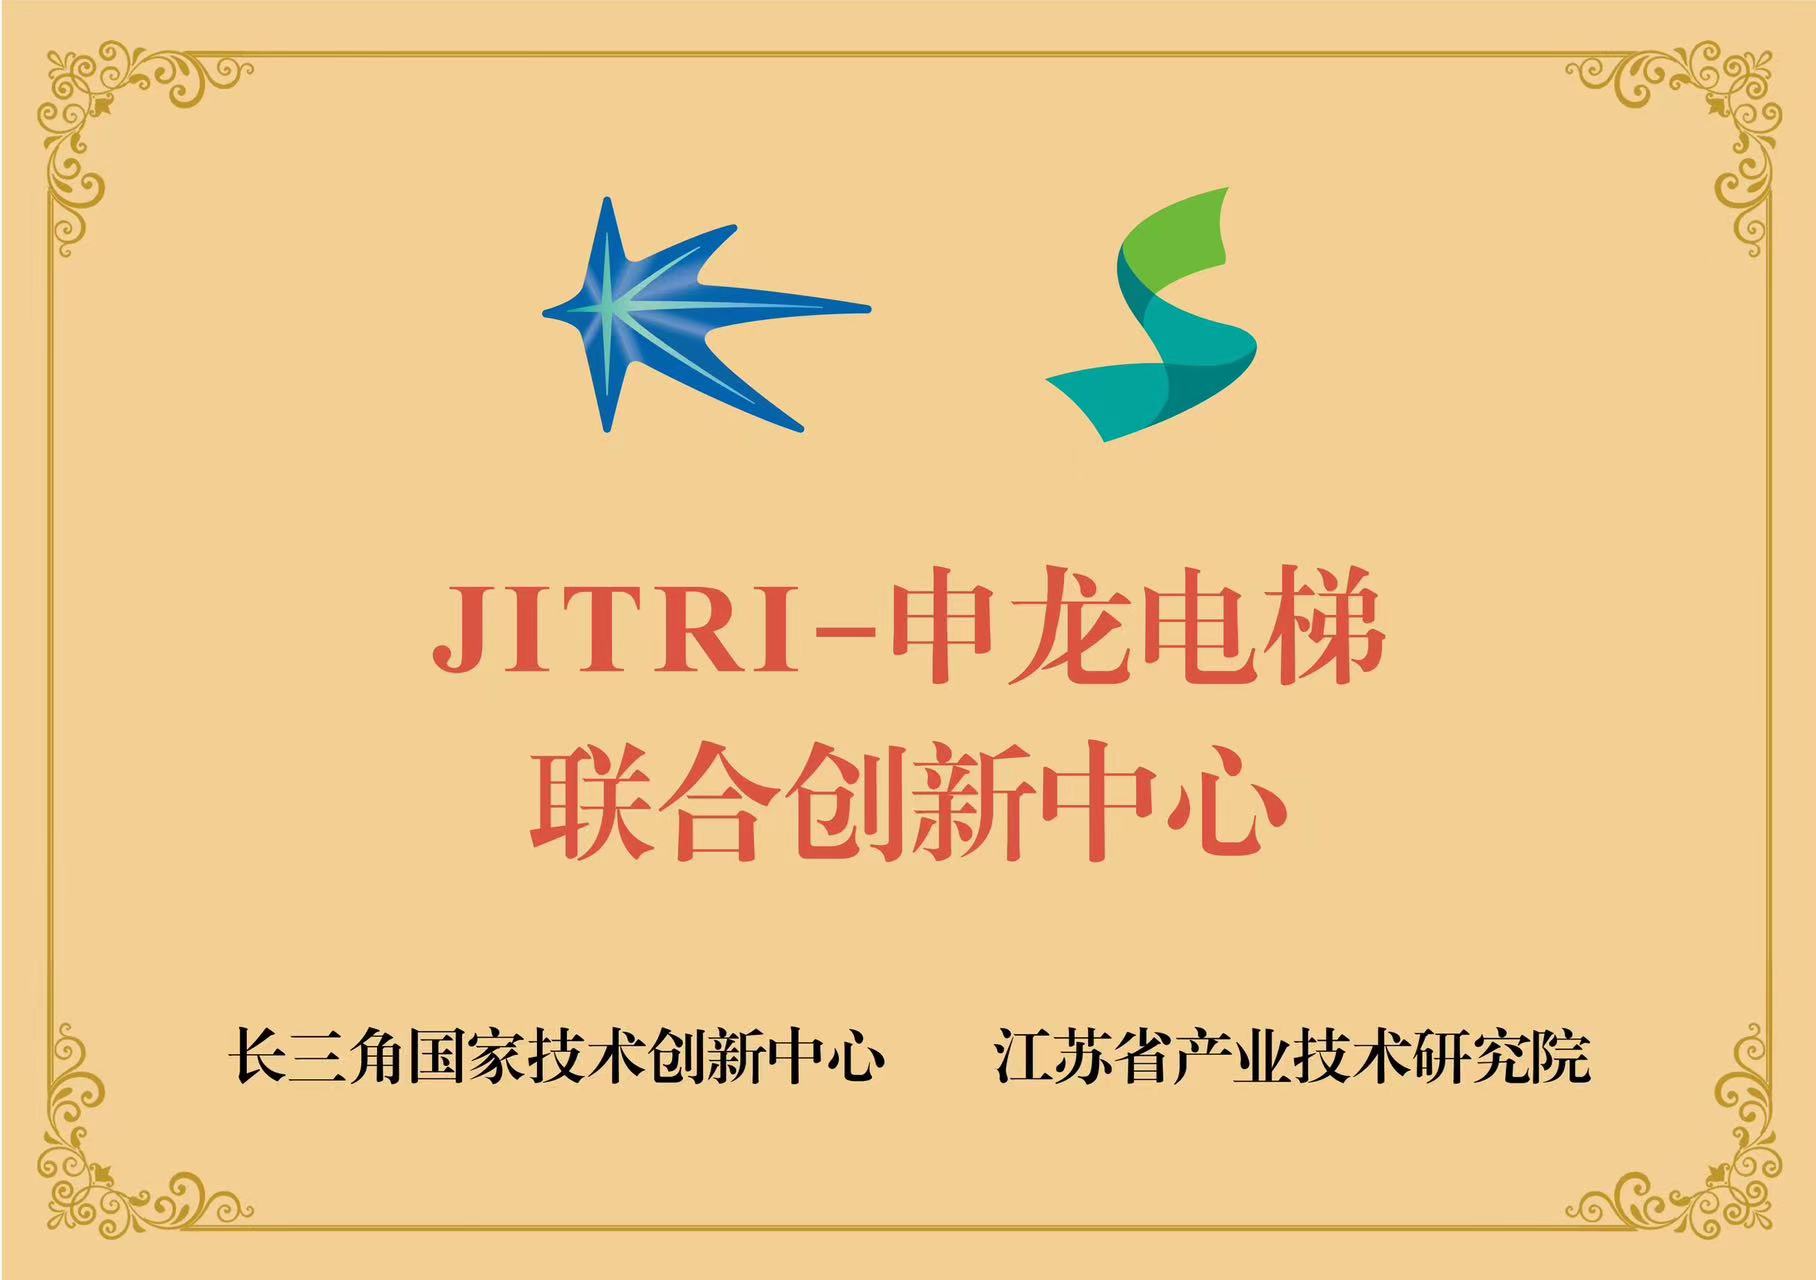 JITRI-申龙电梯联合创新中心